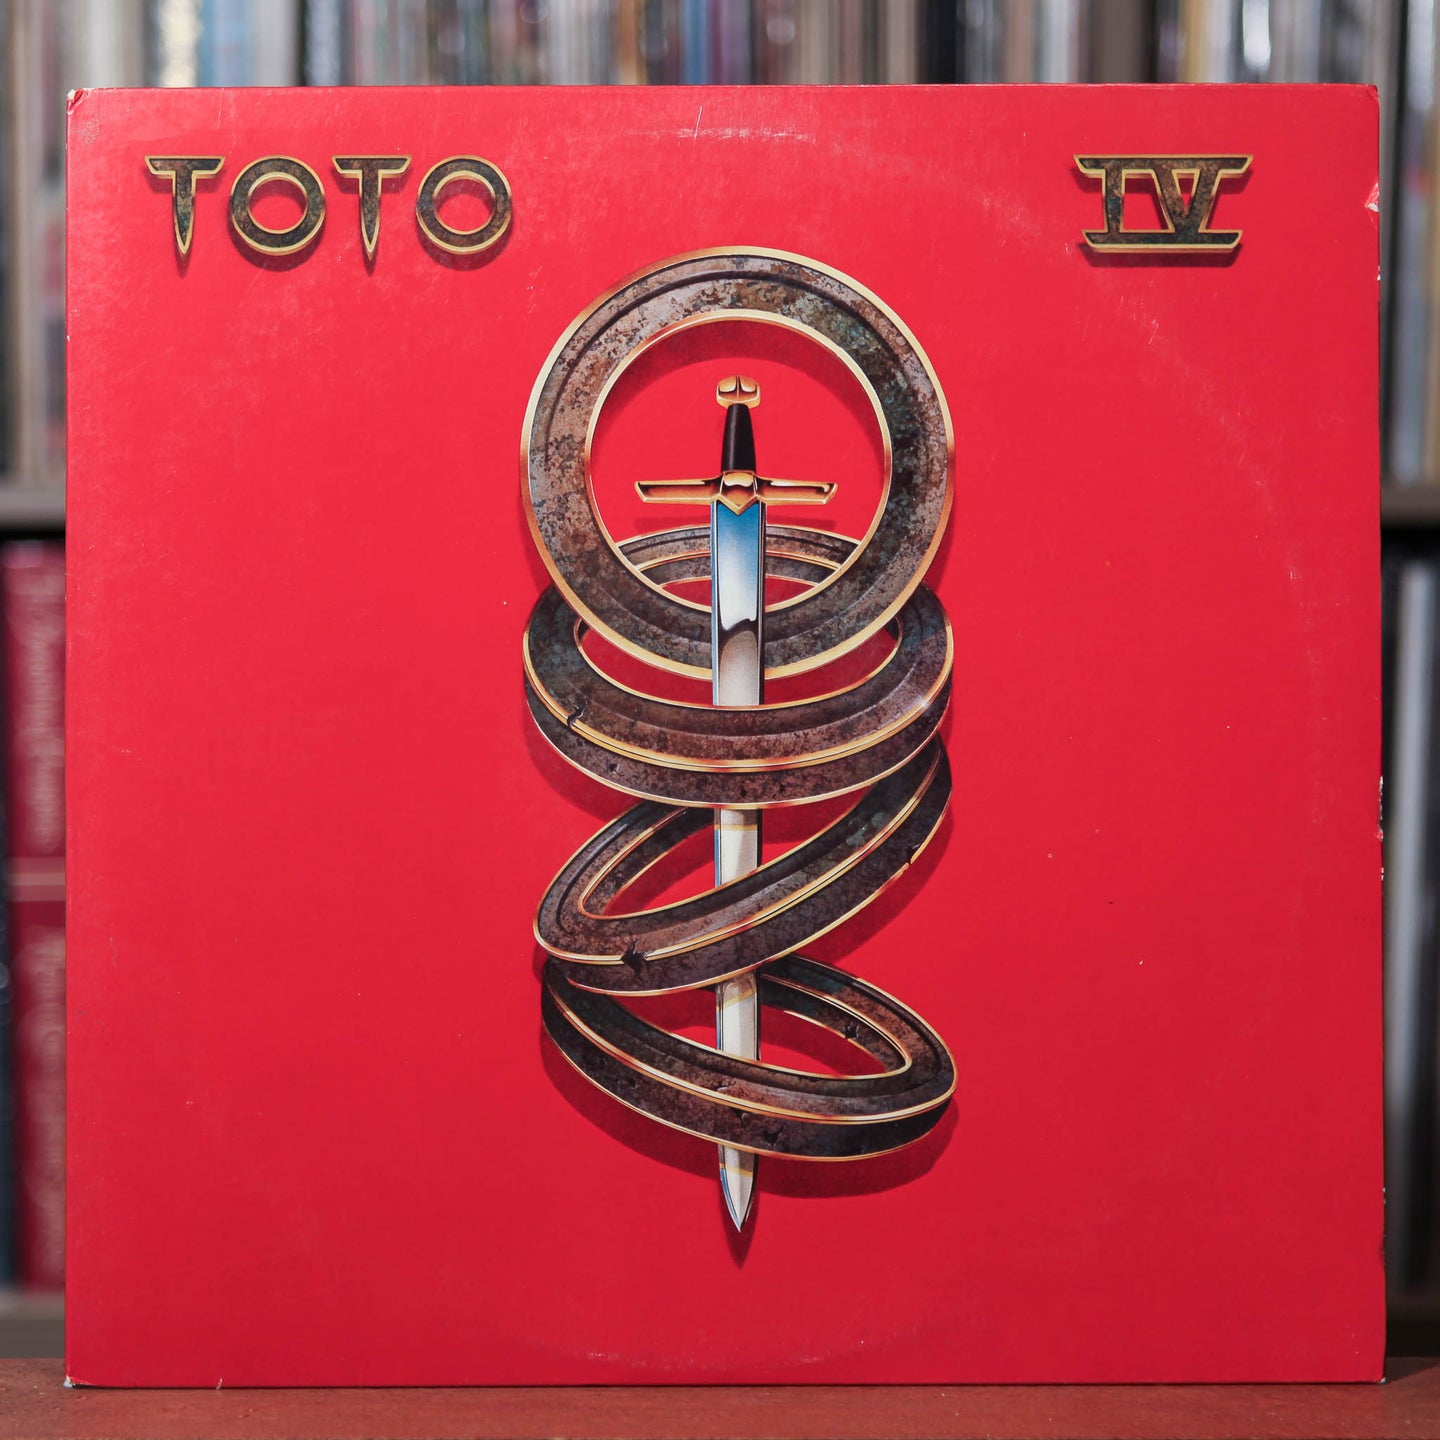 Toto - Toto IV - 1982 Columbia, VG+/EX